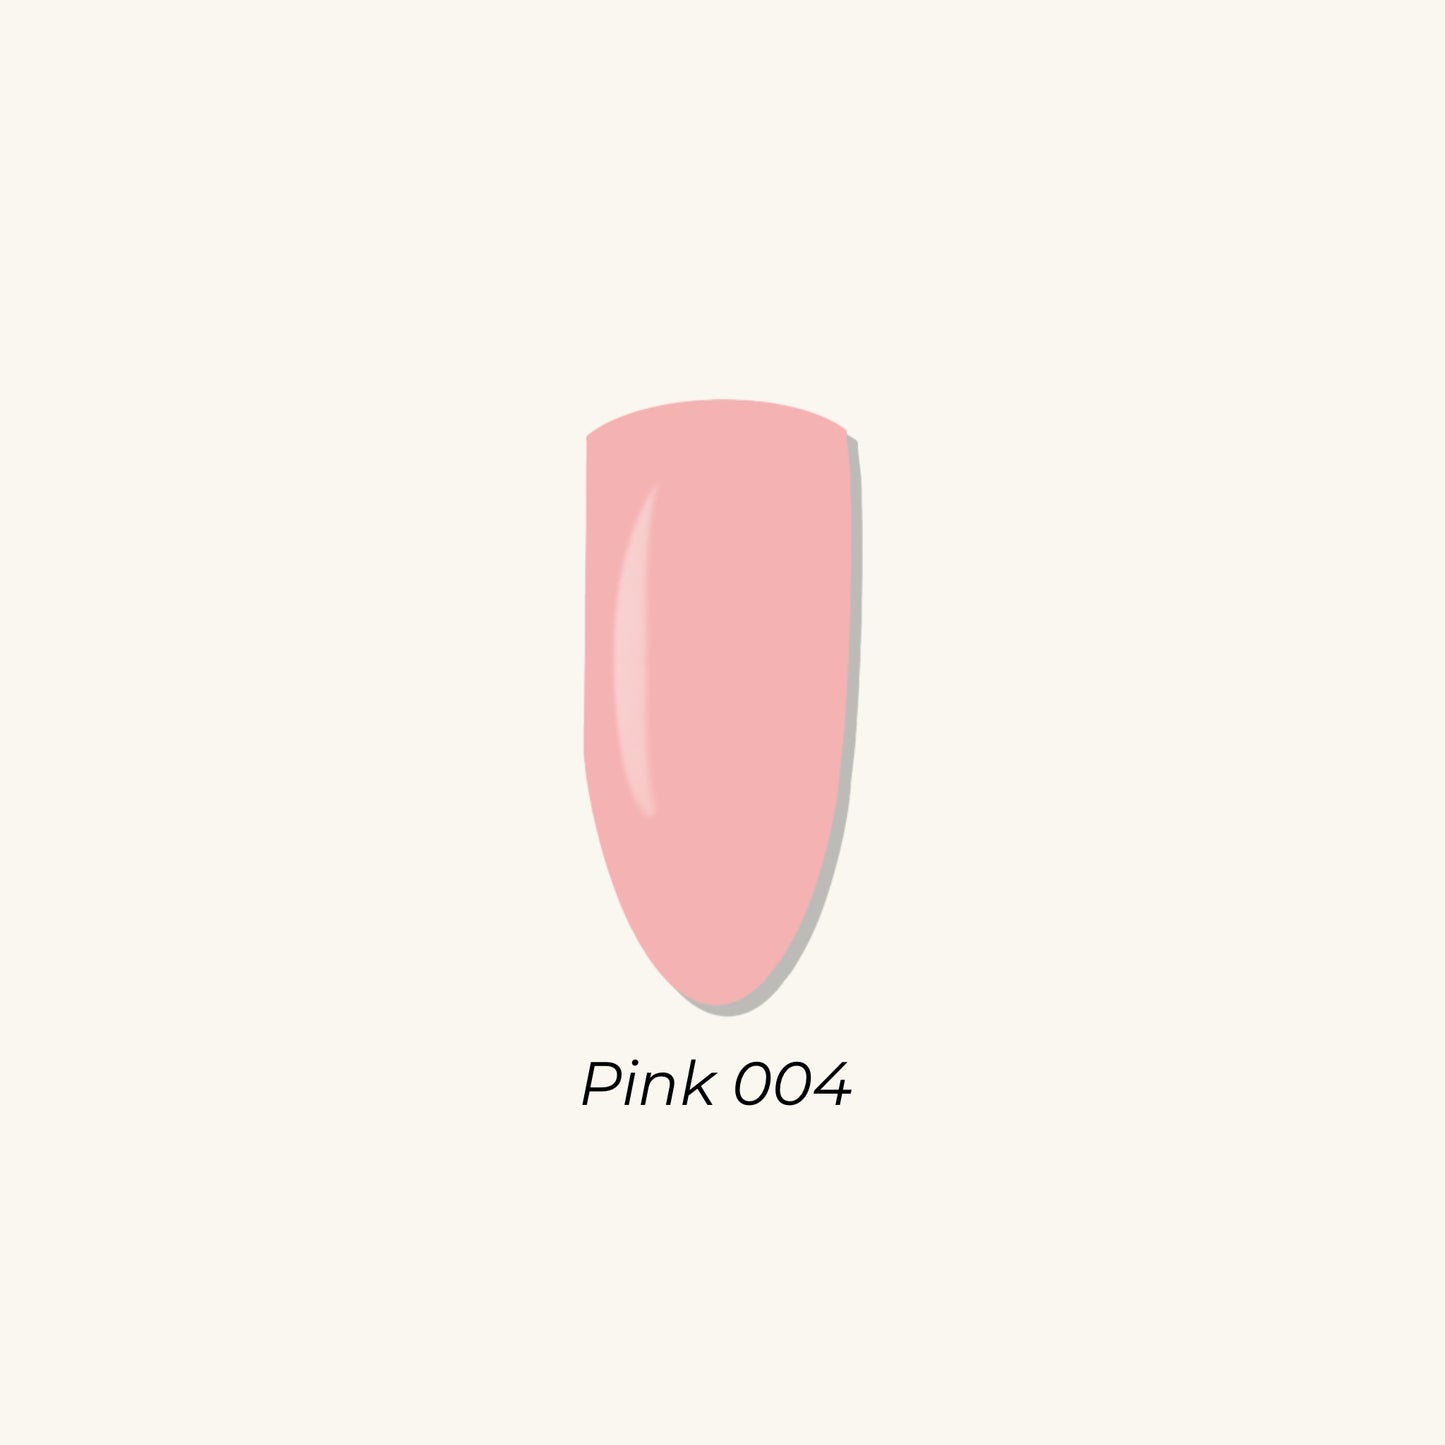 Pink 004